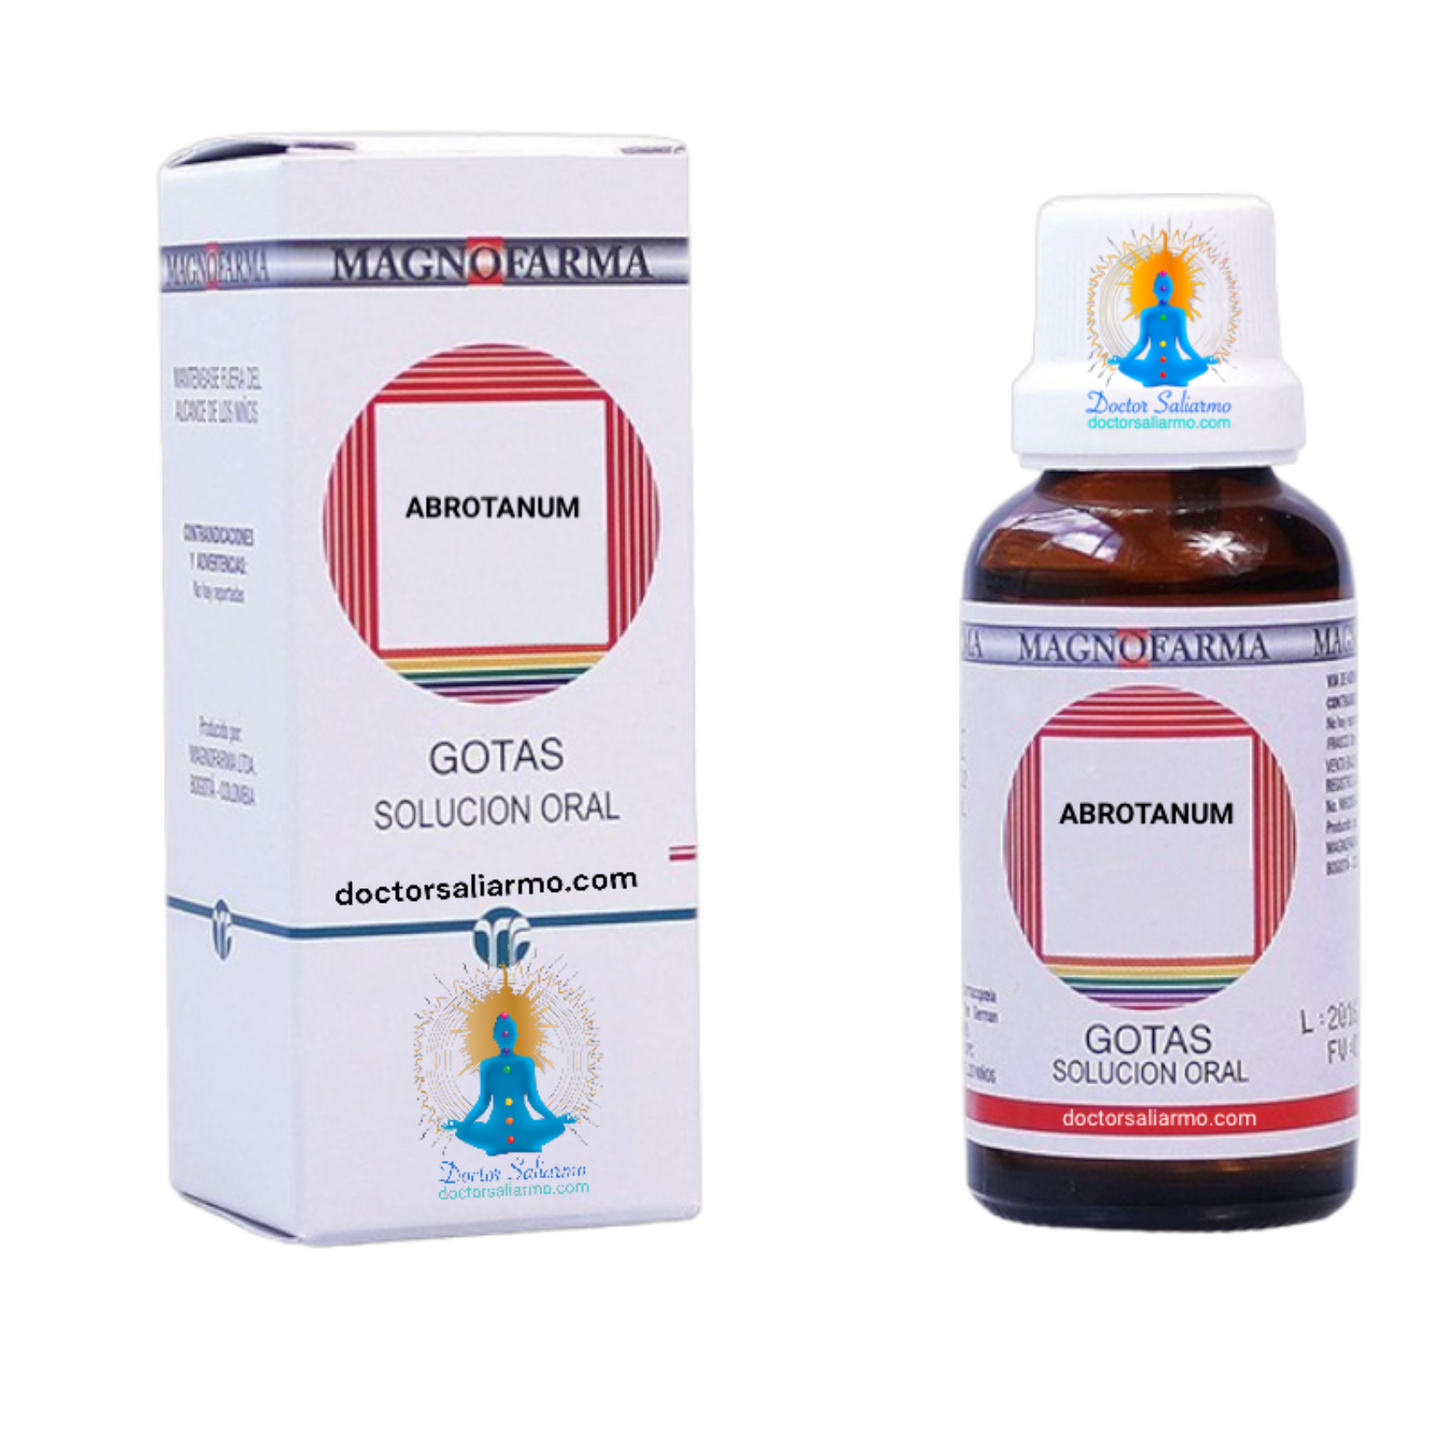 Abrotanum medicamento homeopático indicado para ayudar en hiperhidrosis, hiperqueratosis, eczemas, eritemas.